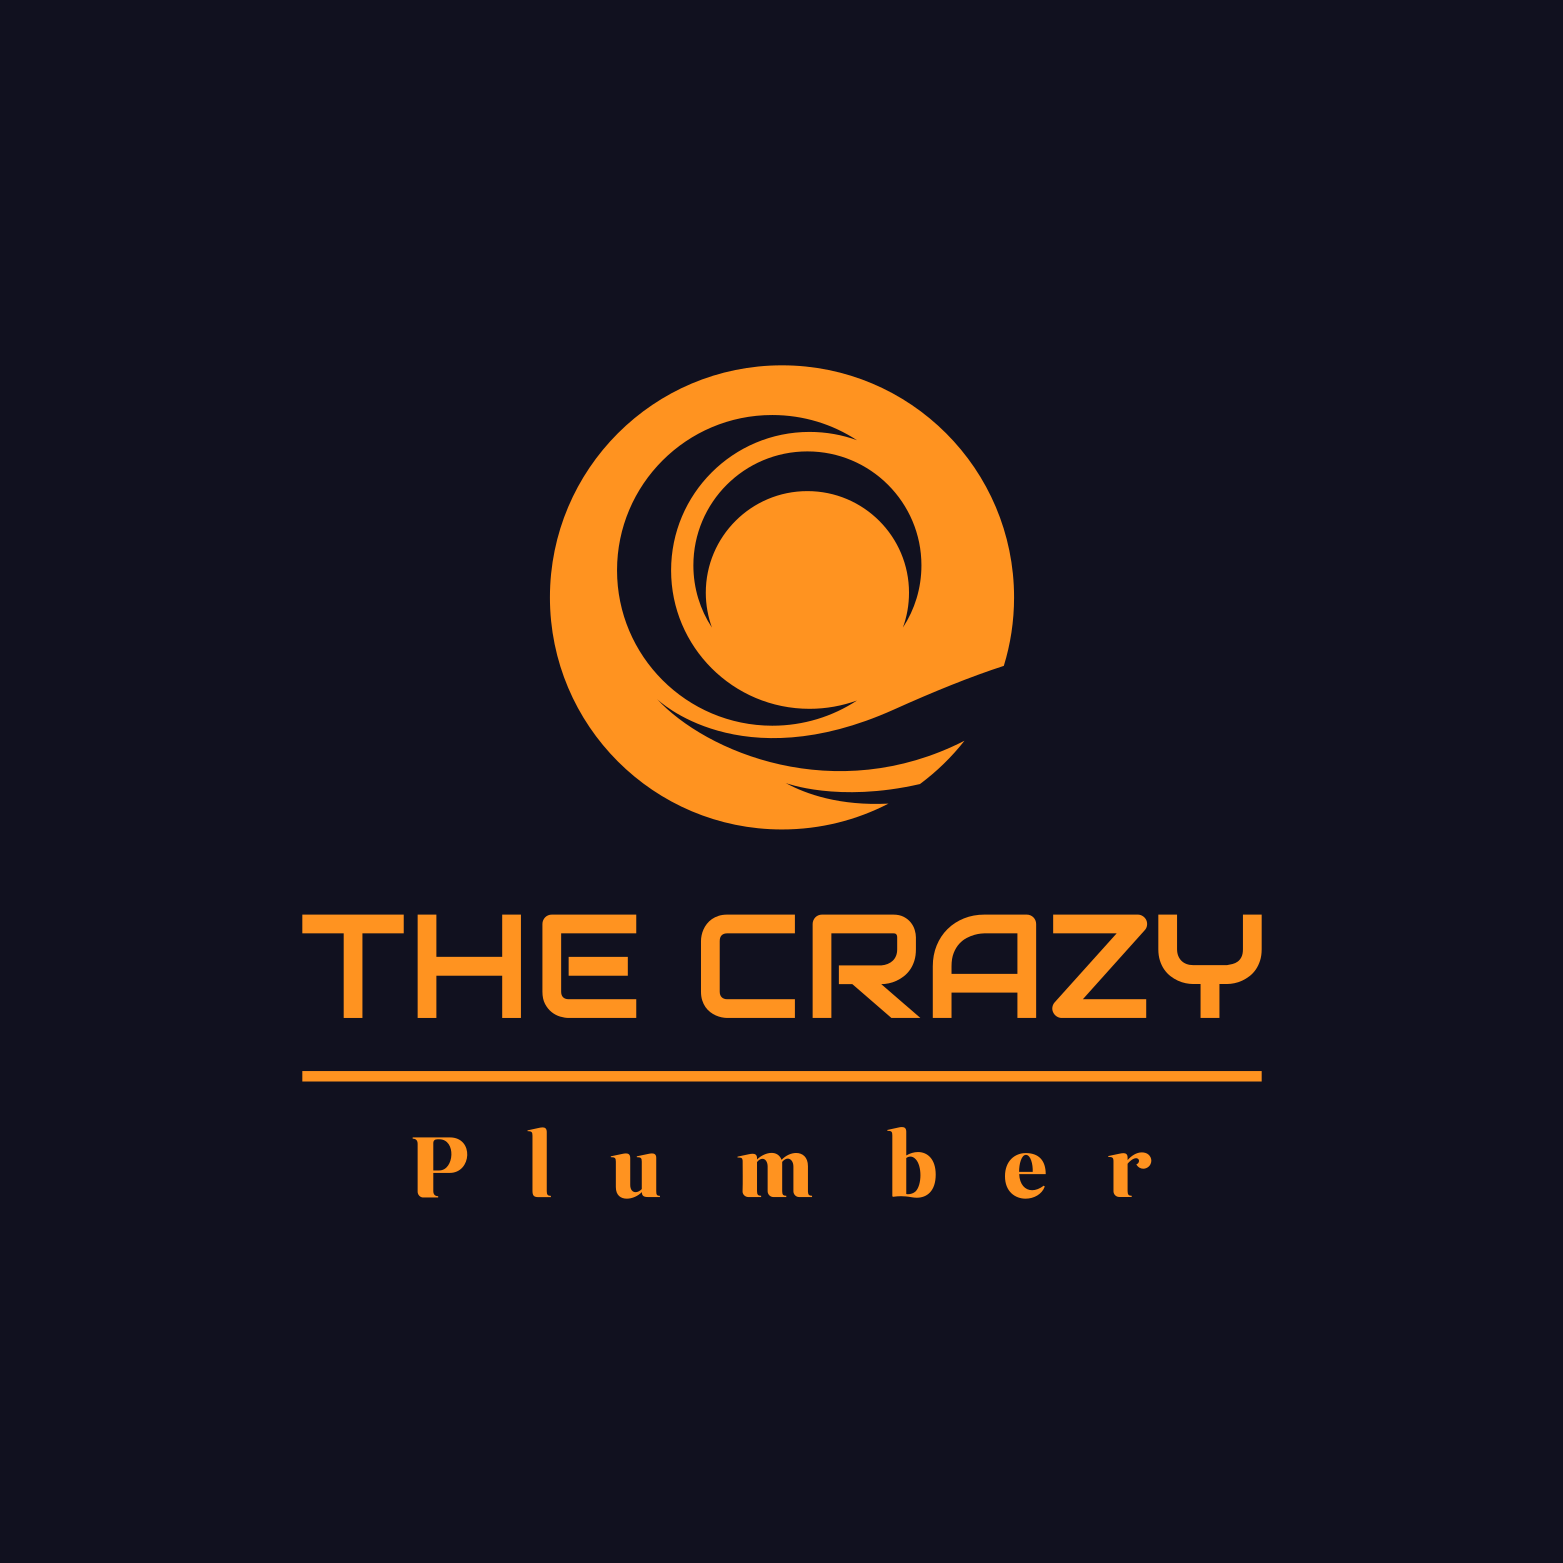 The Crazy Plumber's logo